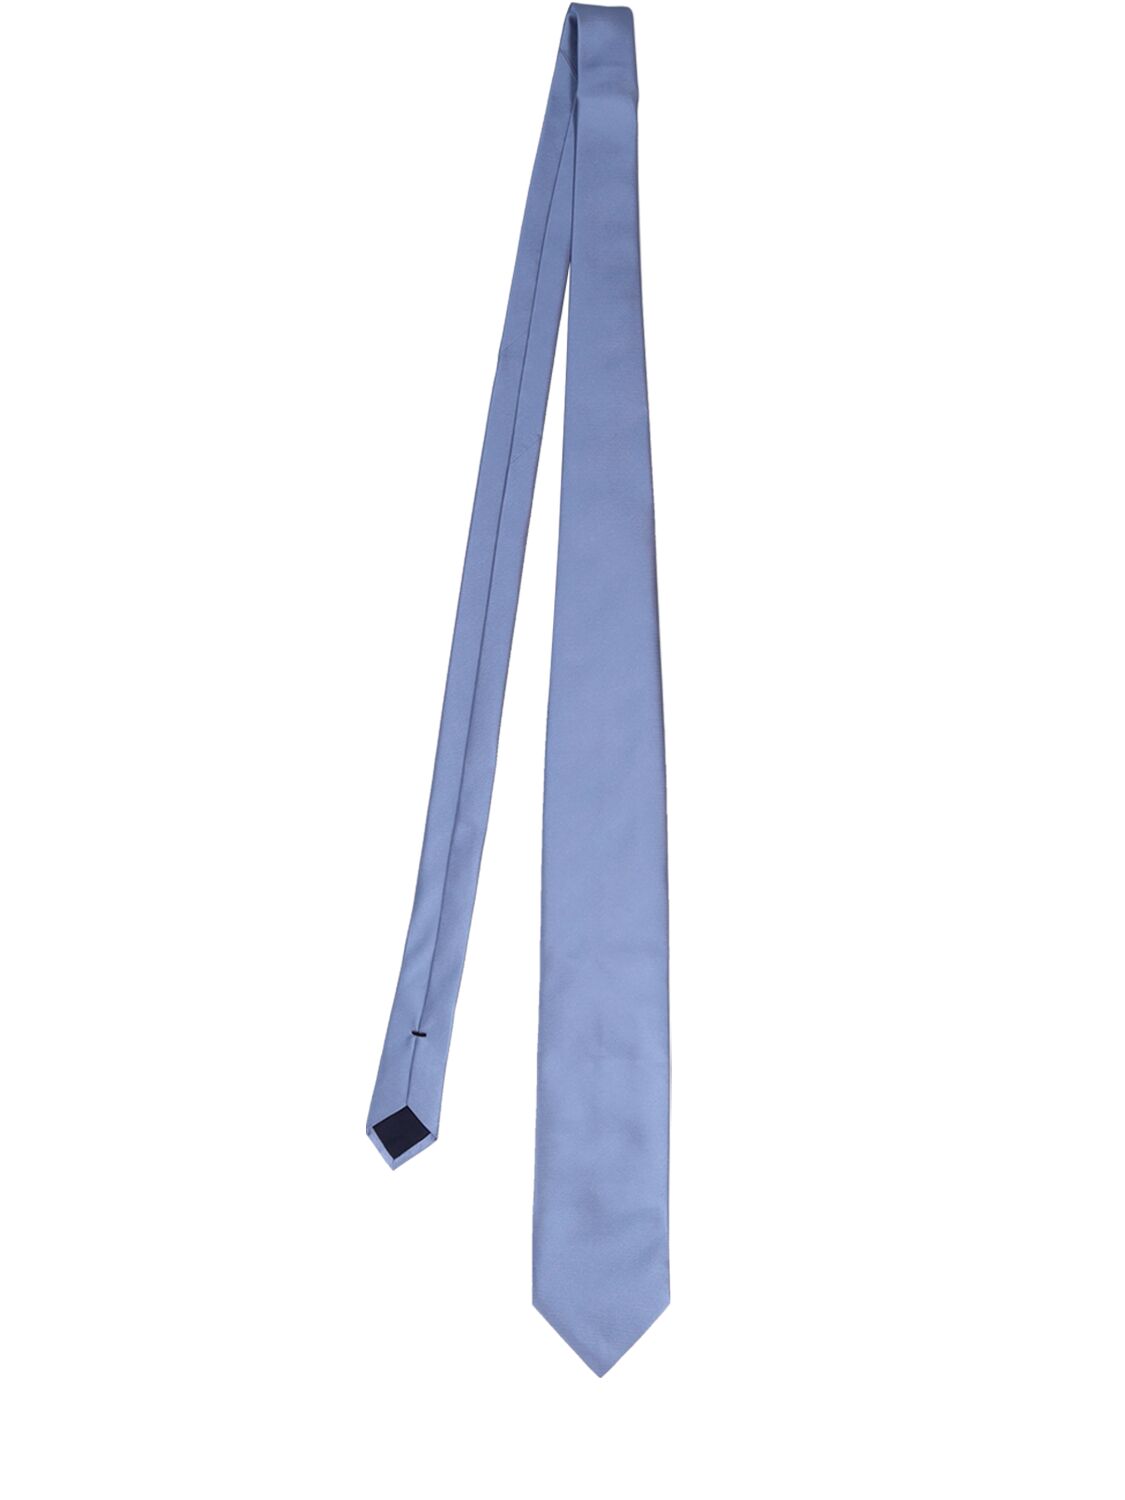 Cravate En Sergé De Soie Unie 8 Cm - TOM FORD - Modalova